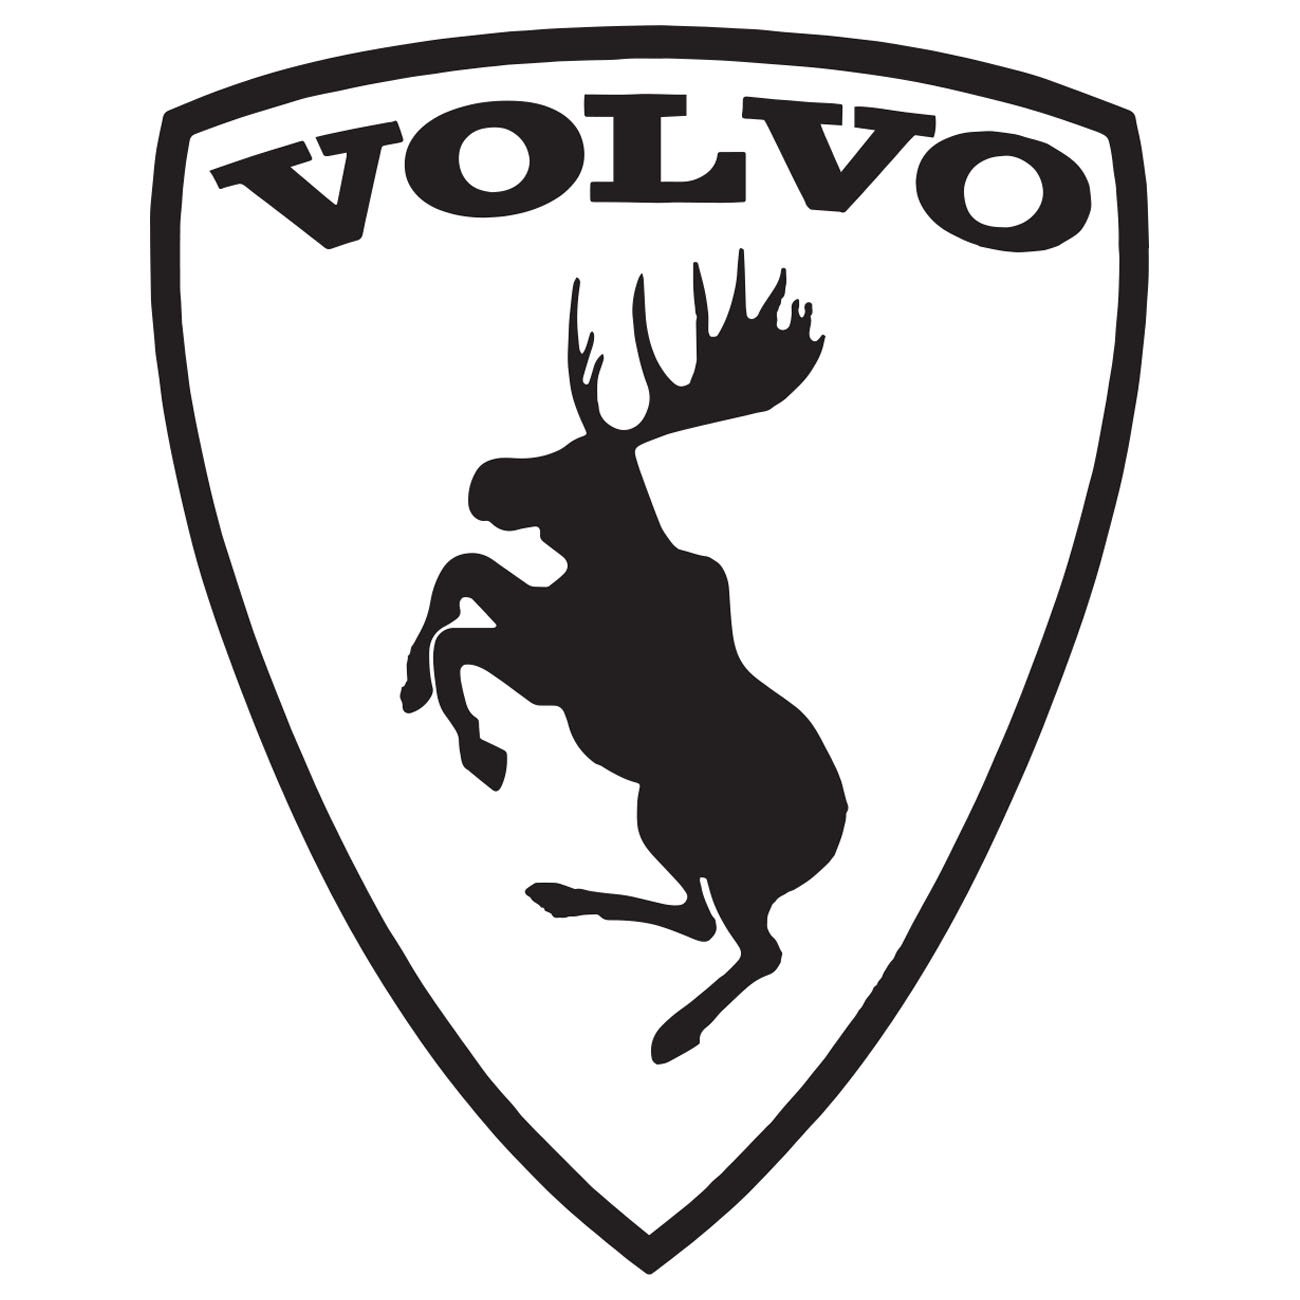 Volvo logo - moose